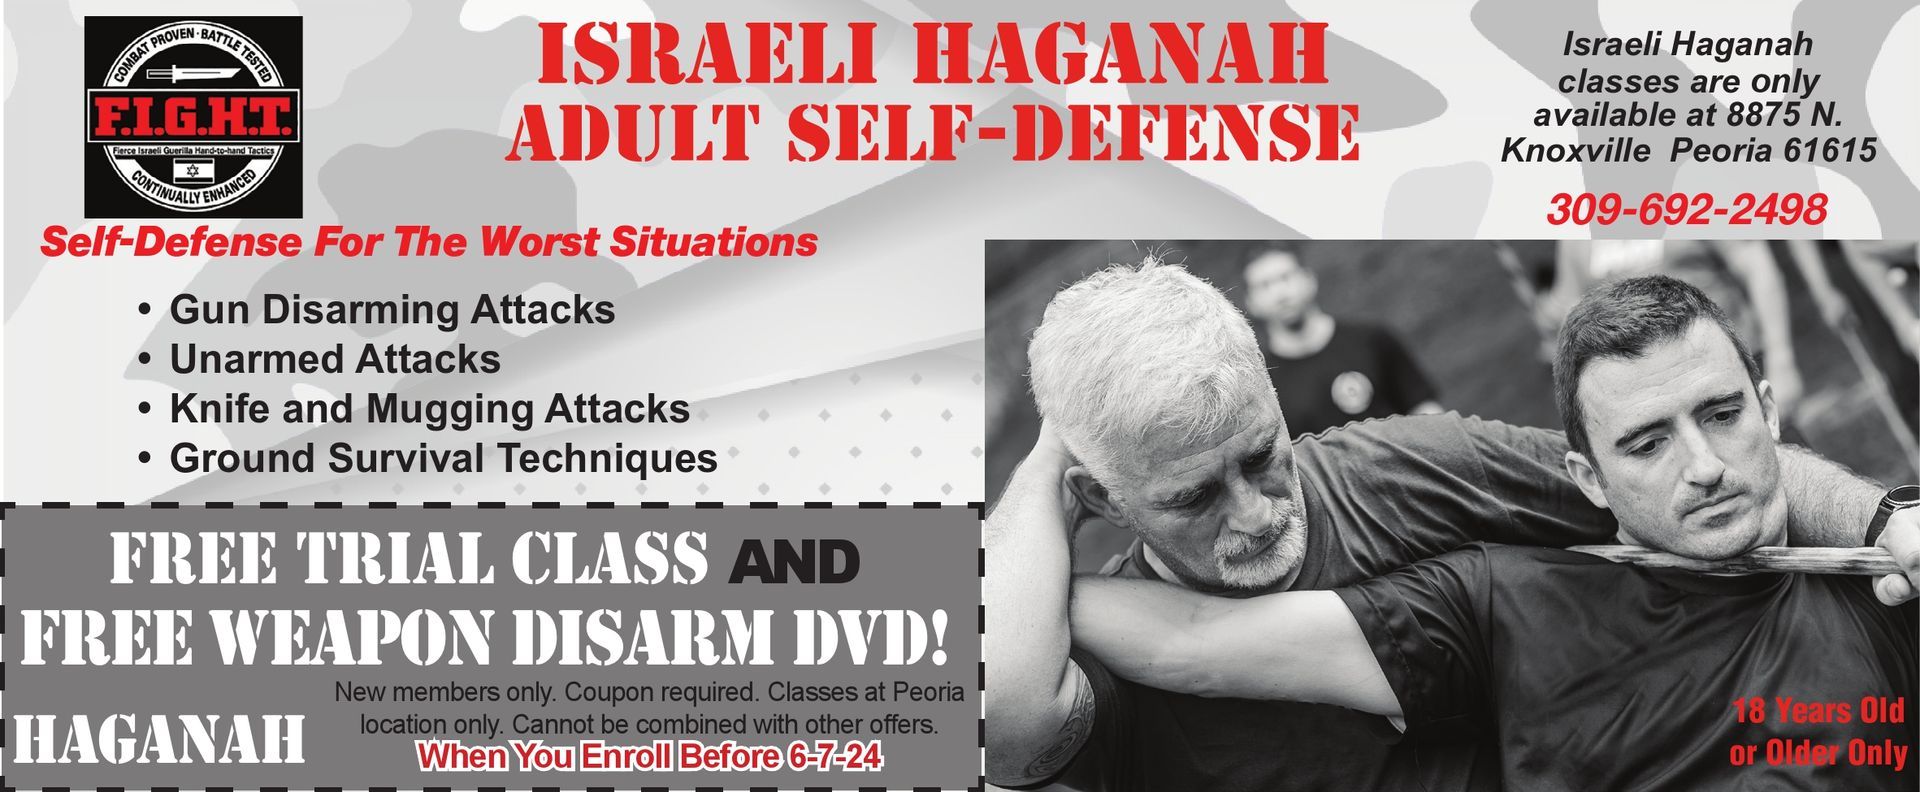 Israeli Haganan Adult Self Defense coupon Peoria, IL